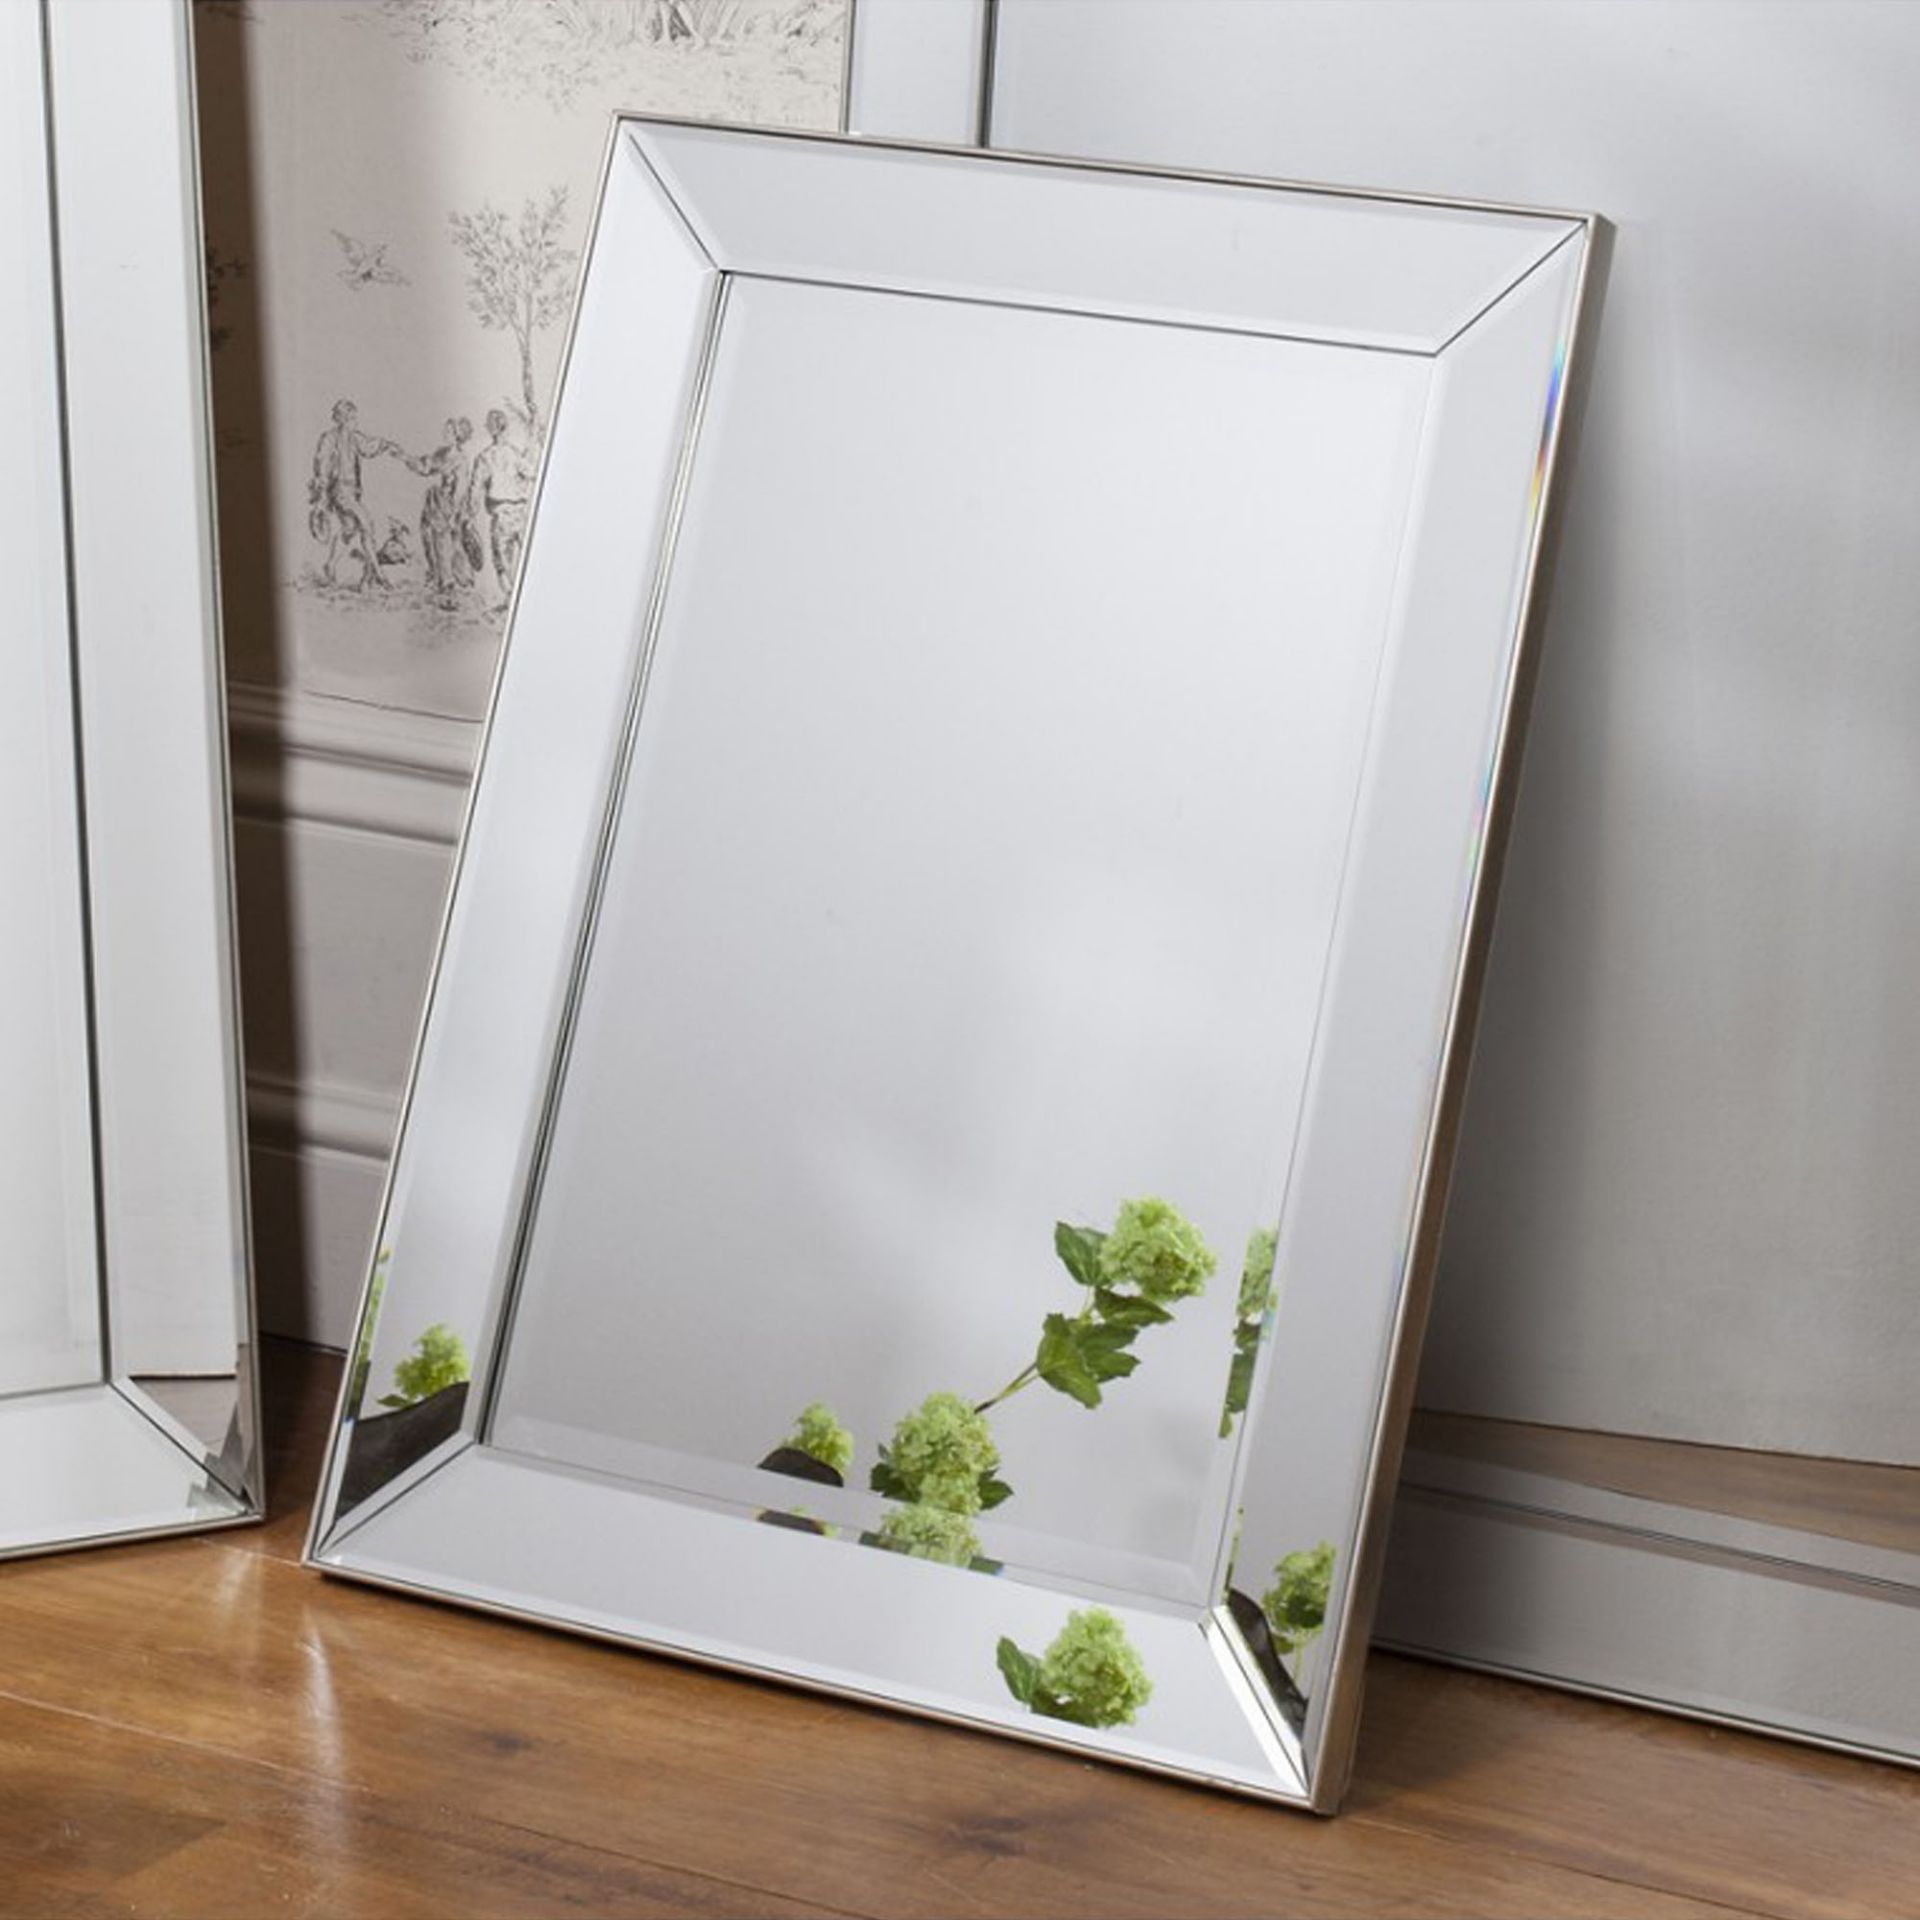 Baskin Mirror 600 x 800mm Clean And Modern Bevelled Mirror Frame The Baskin Mirror Will Add A New